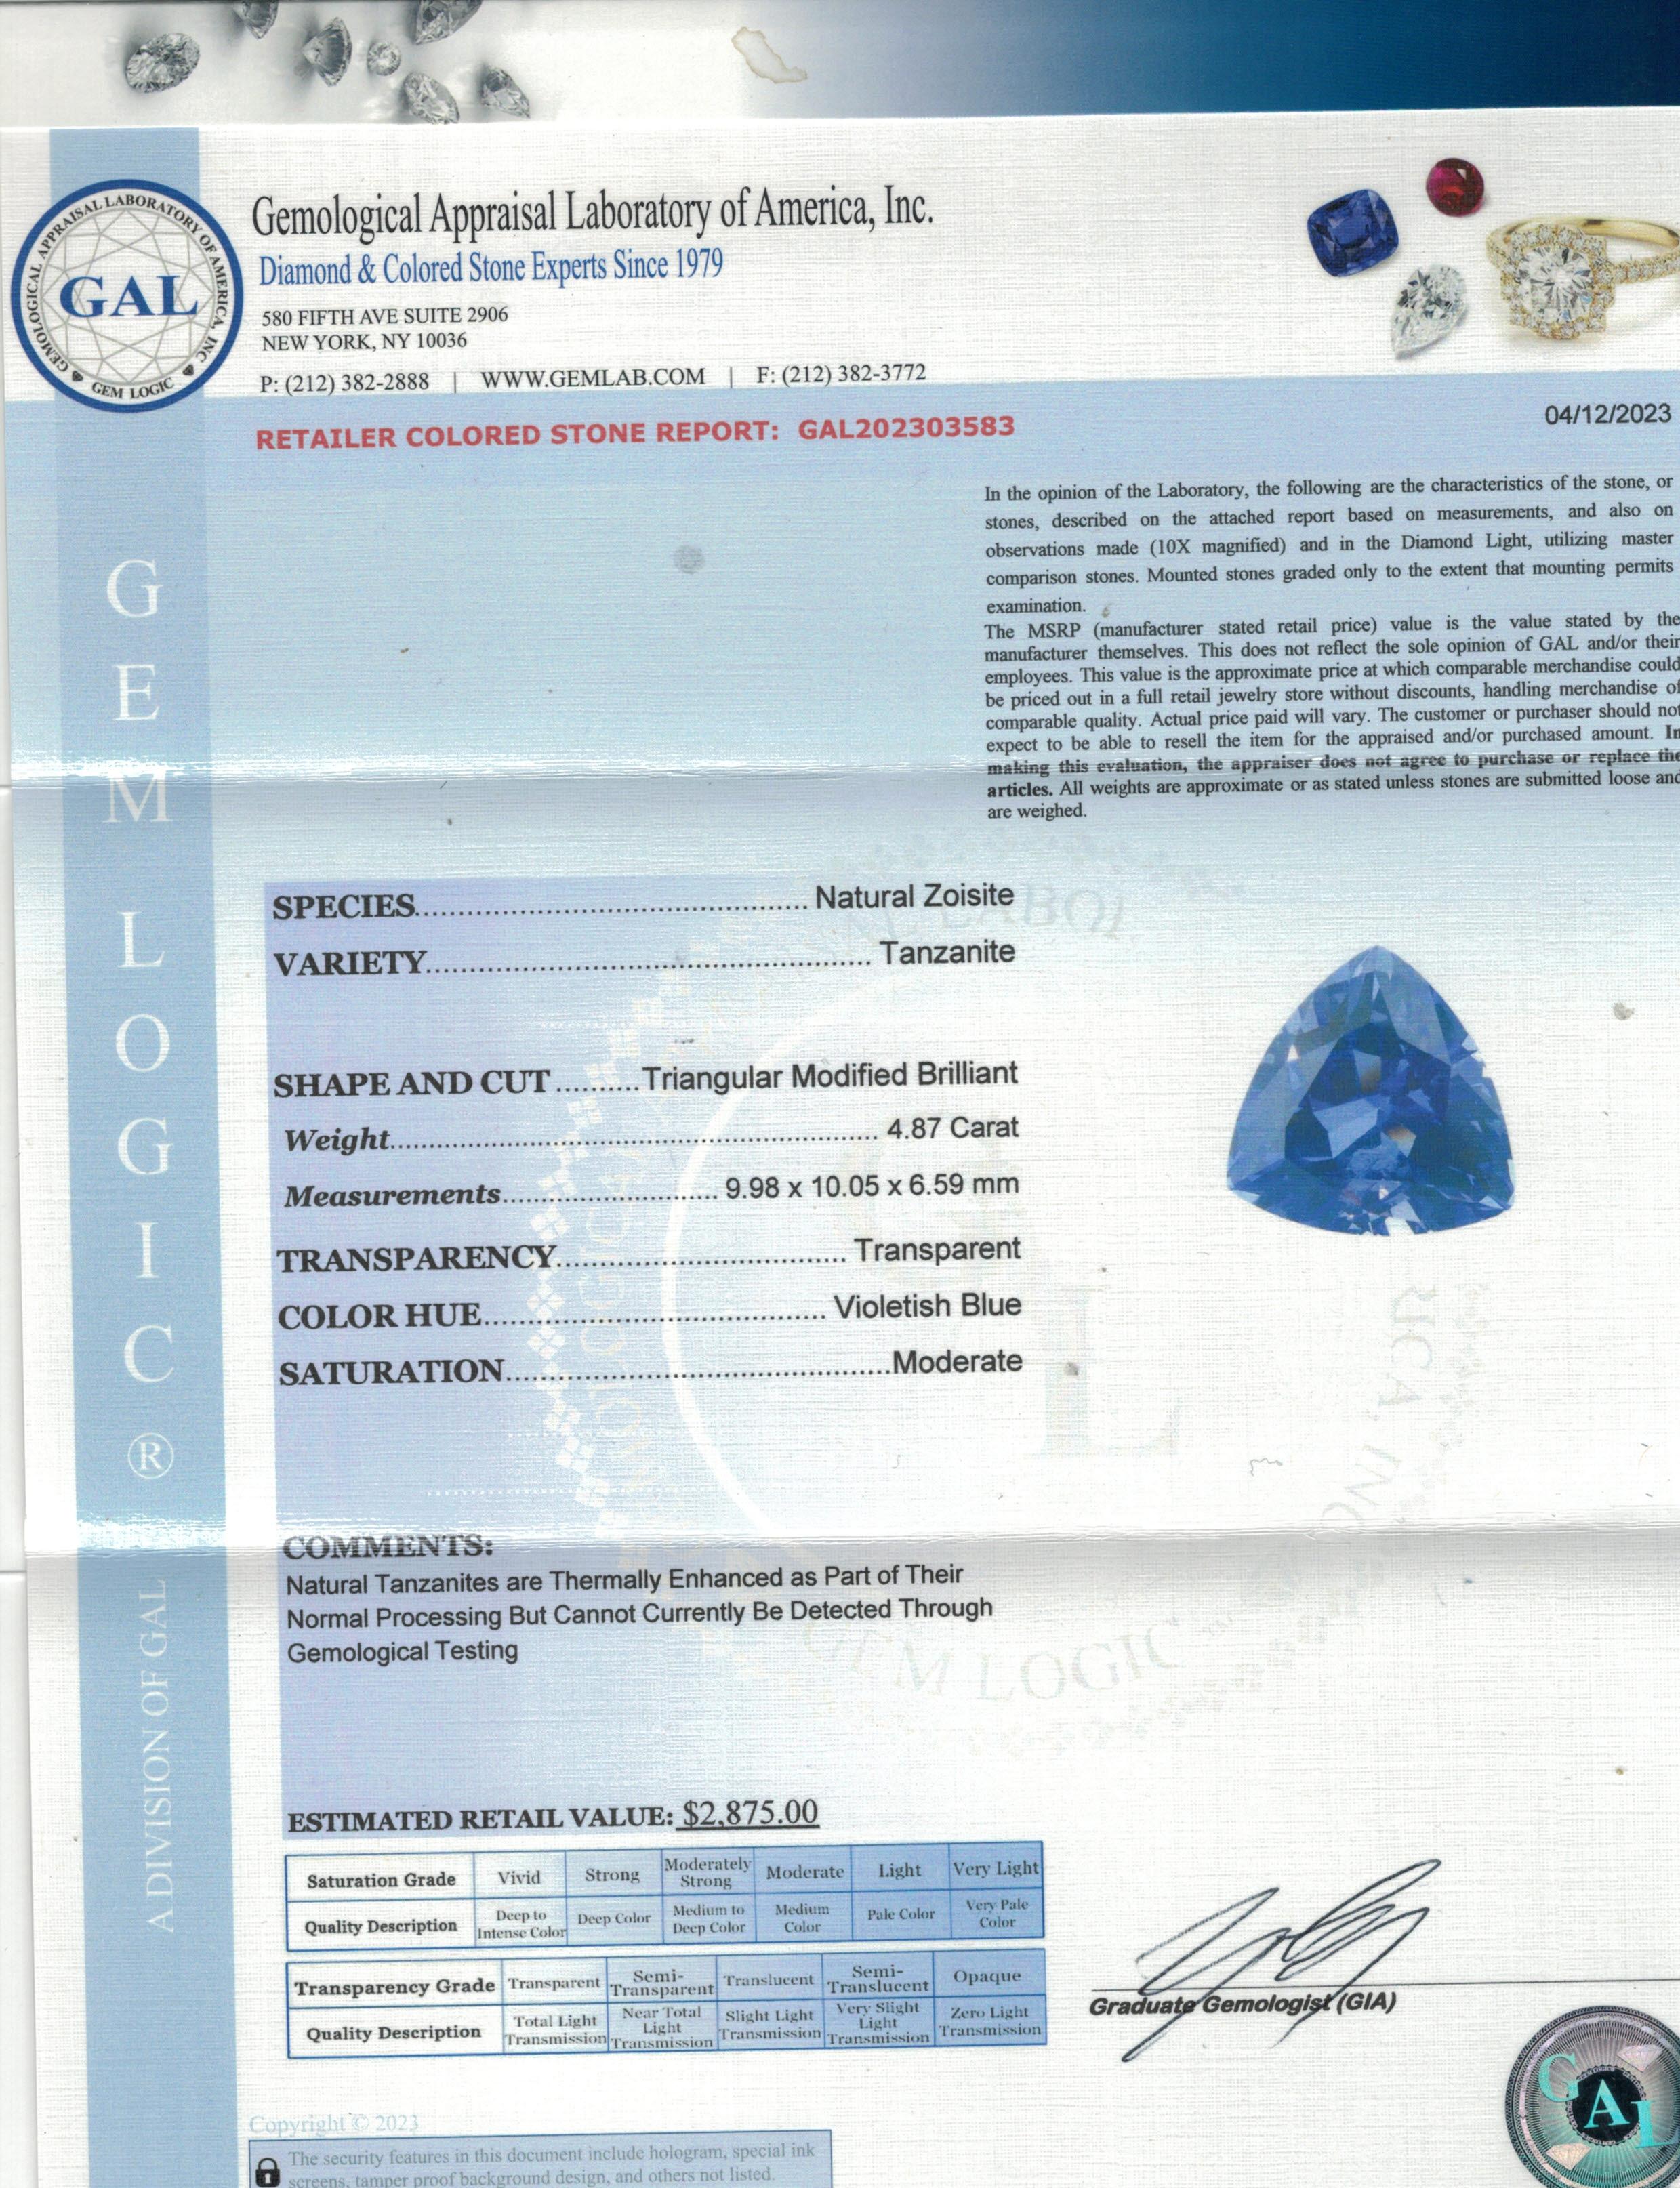 • Gemstone: Tanzanite
• Weight: 4.87 Carats
• Shape: Triangular 
• Dimensions: 9.98 x 10.05 x 6.59mm
• Estimated Retail value: $2,875
• Color: Violetish Blue